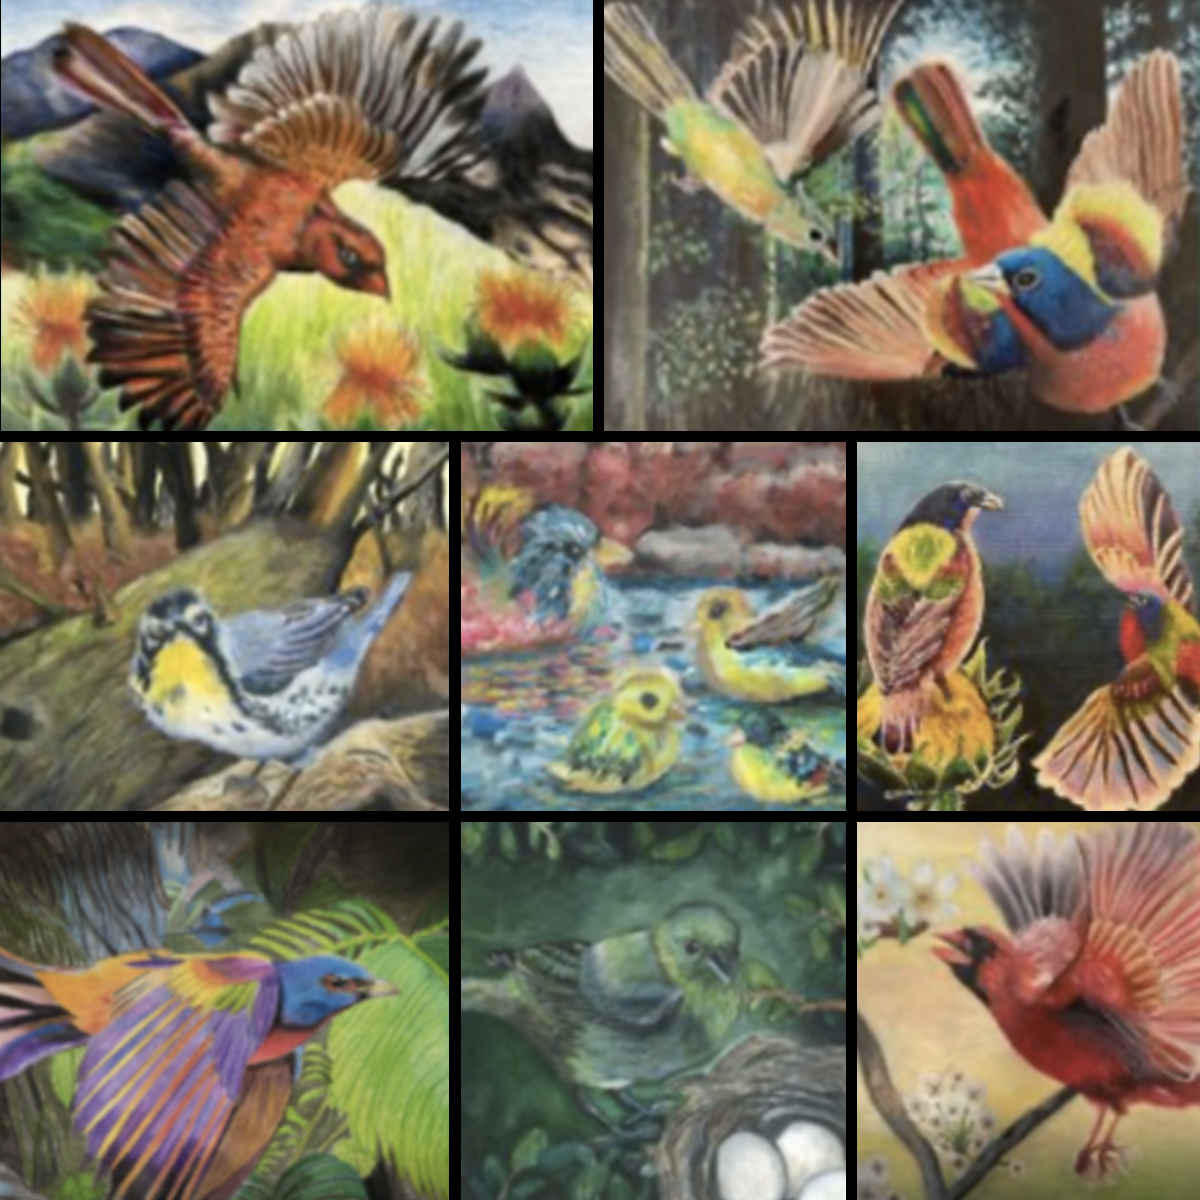 Songbird art contest winners collage